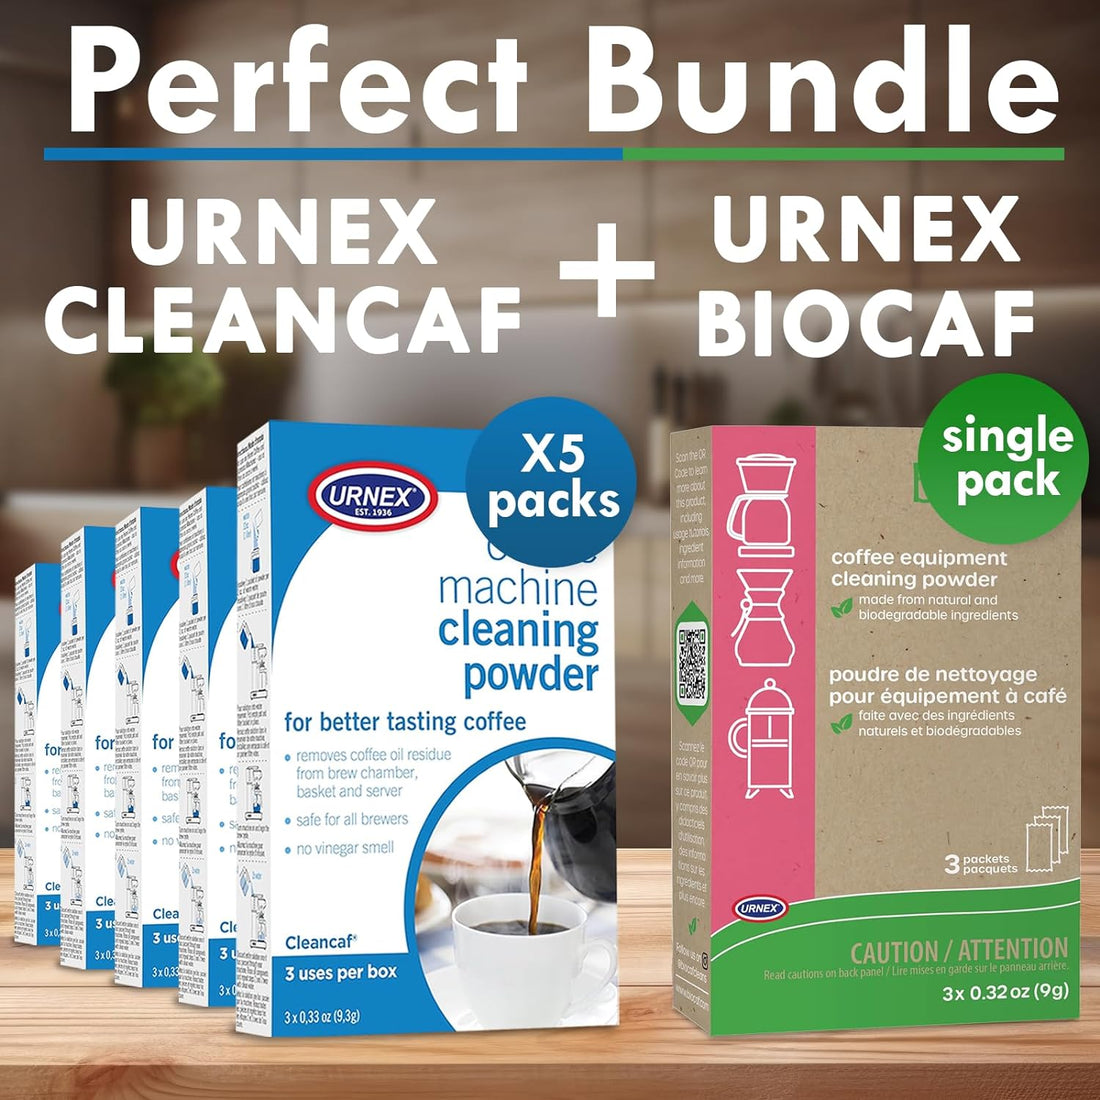 Urnex Cleaning Powder Cleancaf and BioCaf Espresso Machine Cleaner 6 Pack